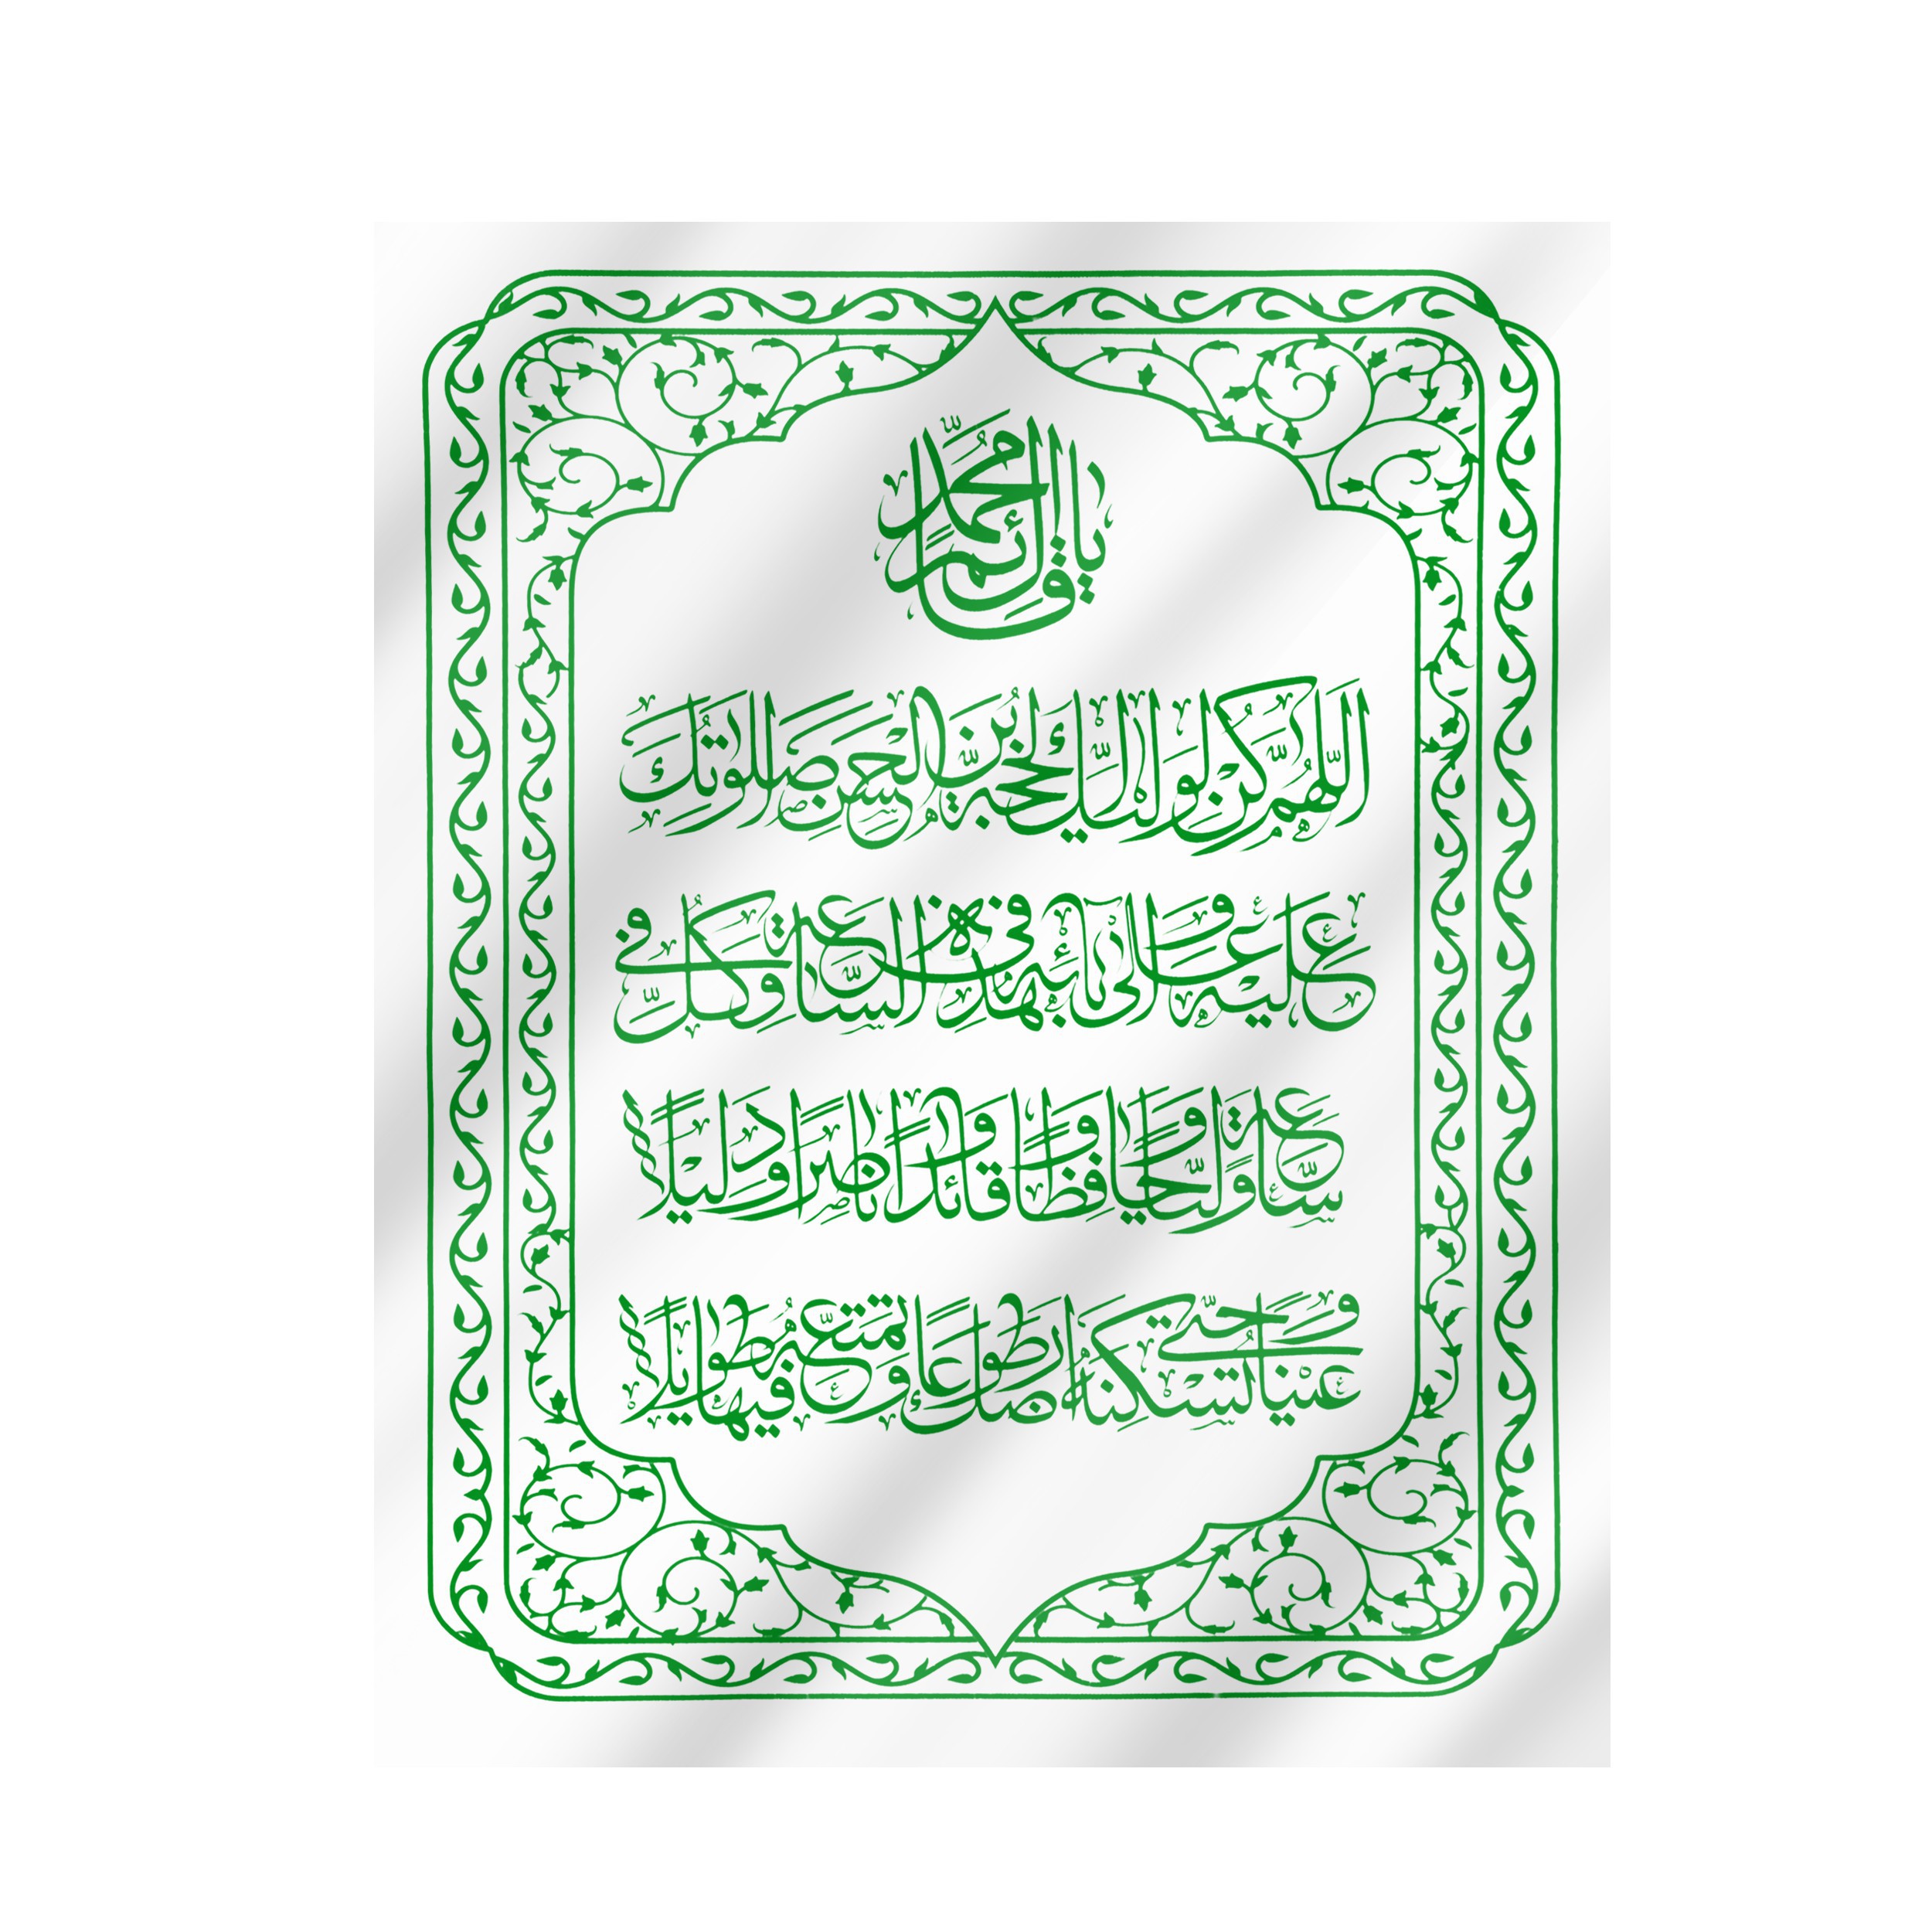 پرچم طرح مذهبی دعای سلامتی امام عصر علیه السلام کد 20001410